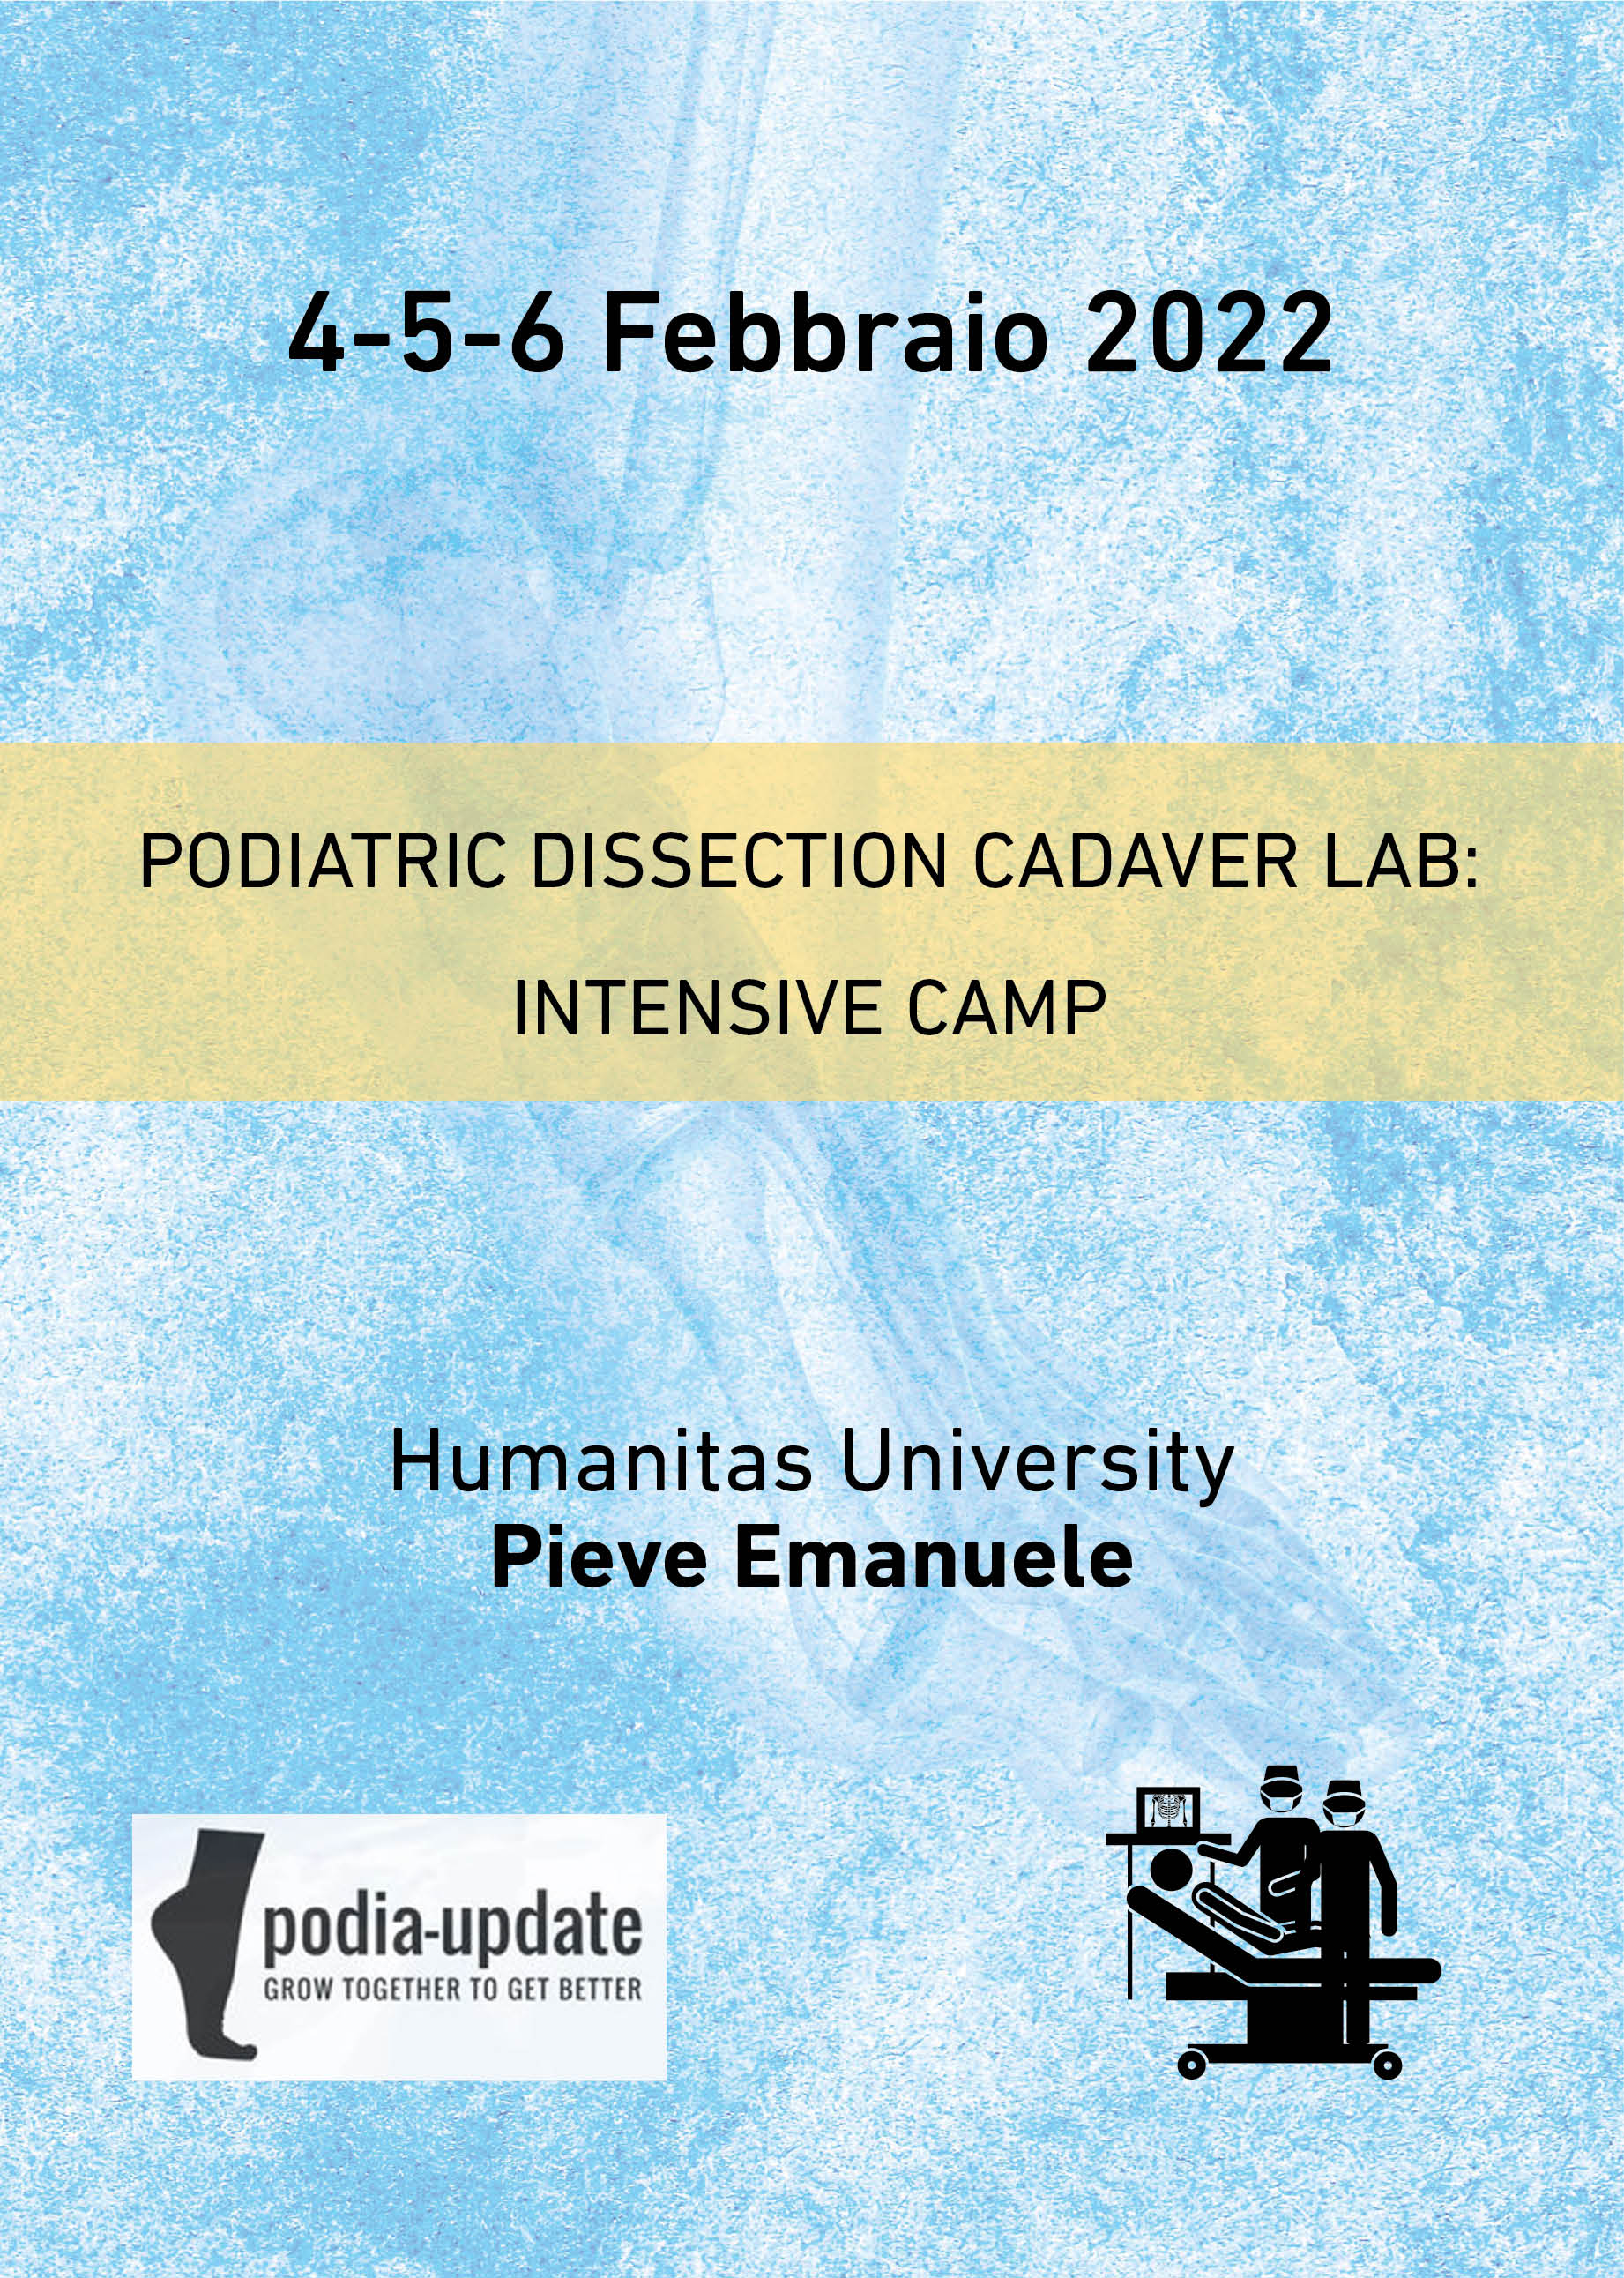 Podiatric dissection cadaver lab: intensive Camp - Pieve Emanuele, 04 Febbraio 2022